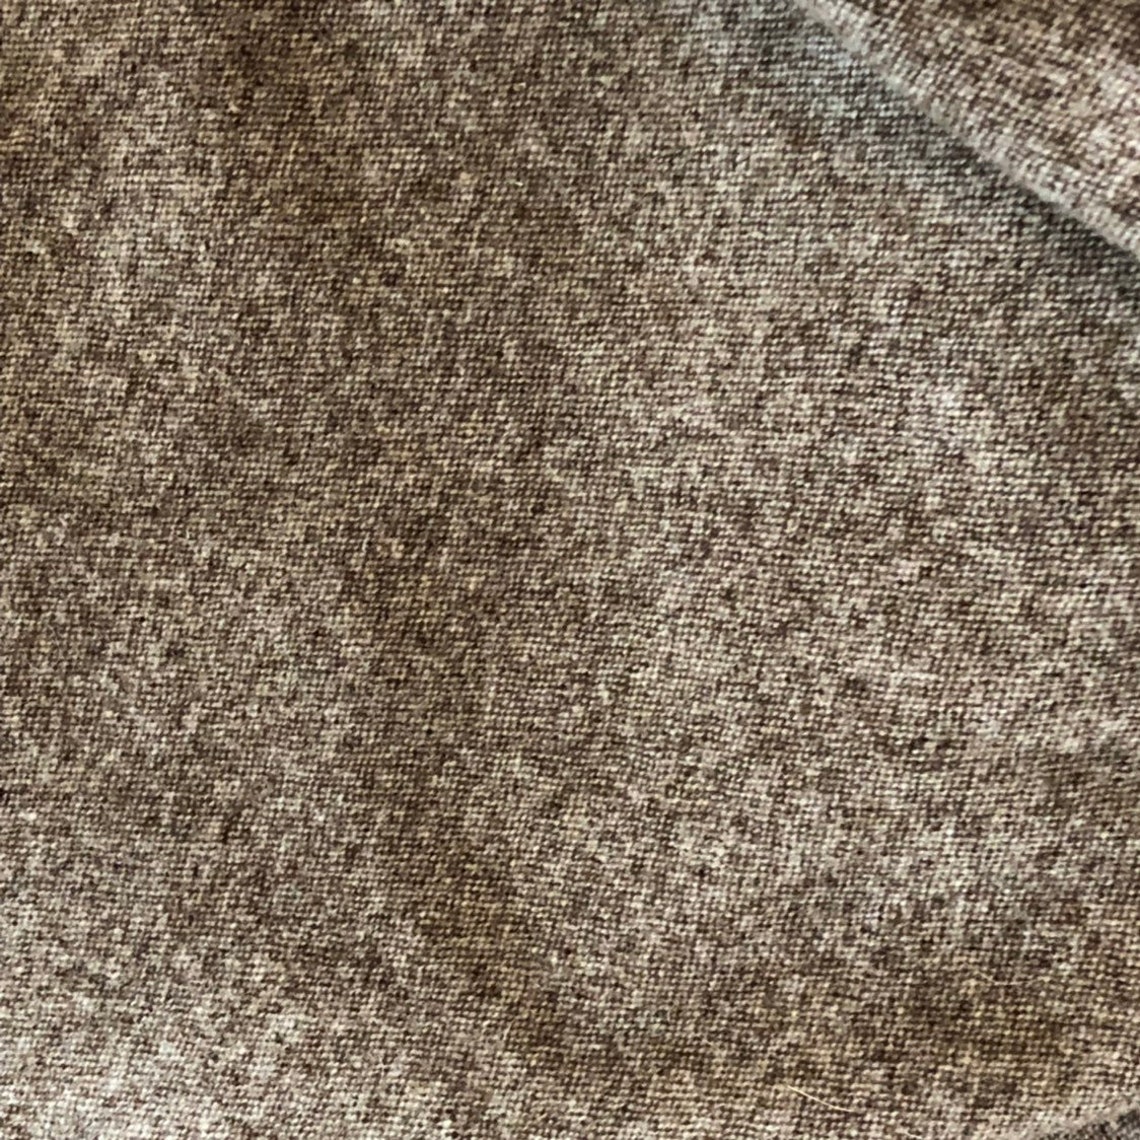 Brown Wool Fabric - Etsy